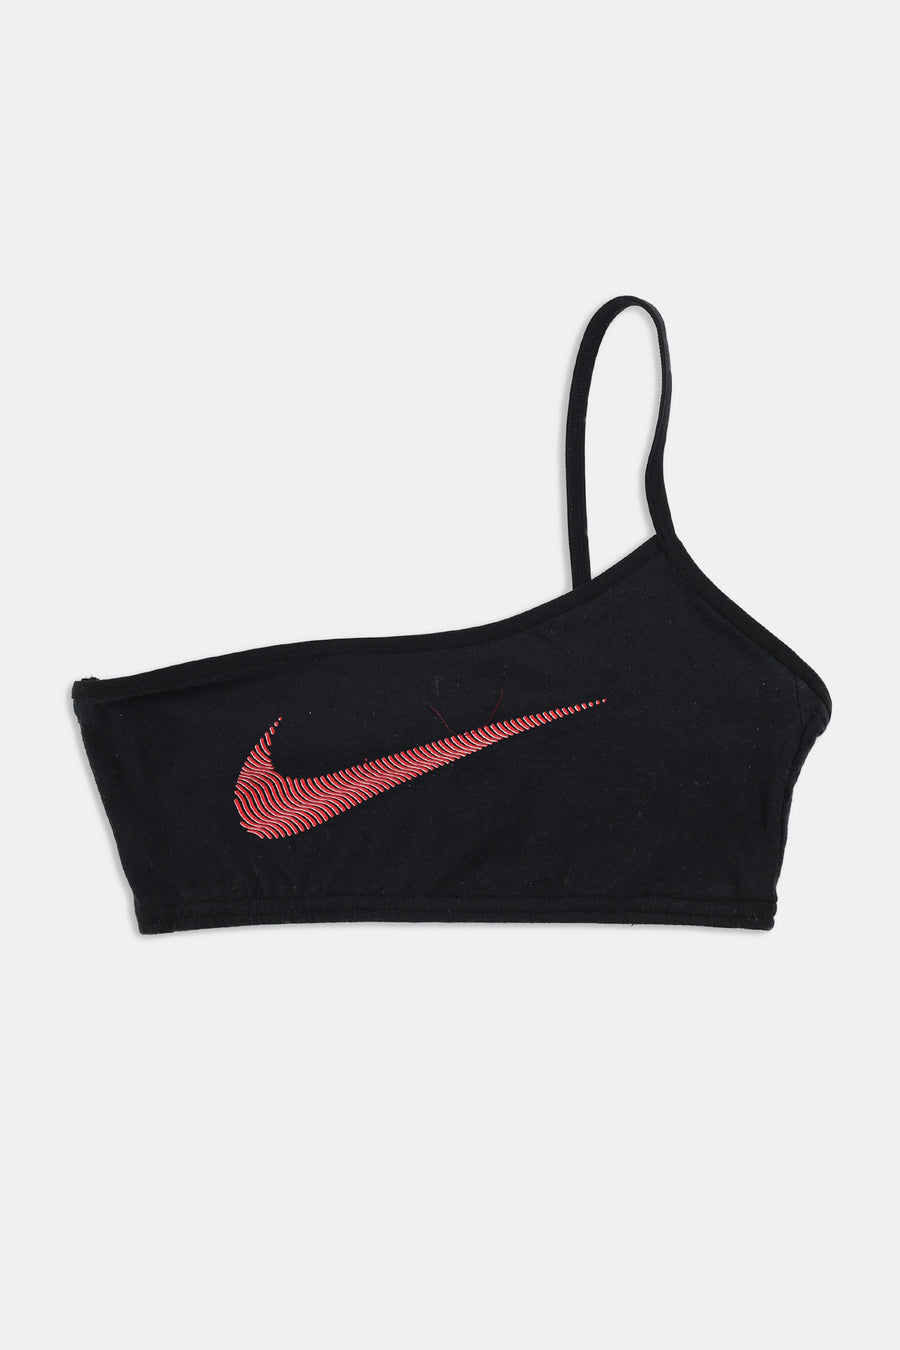 Rework Nike One Shoulder Bra Top - S – Frankie Collective